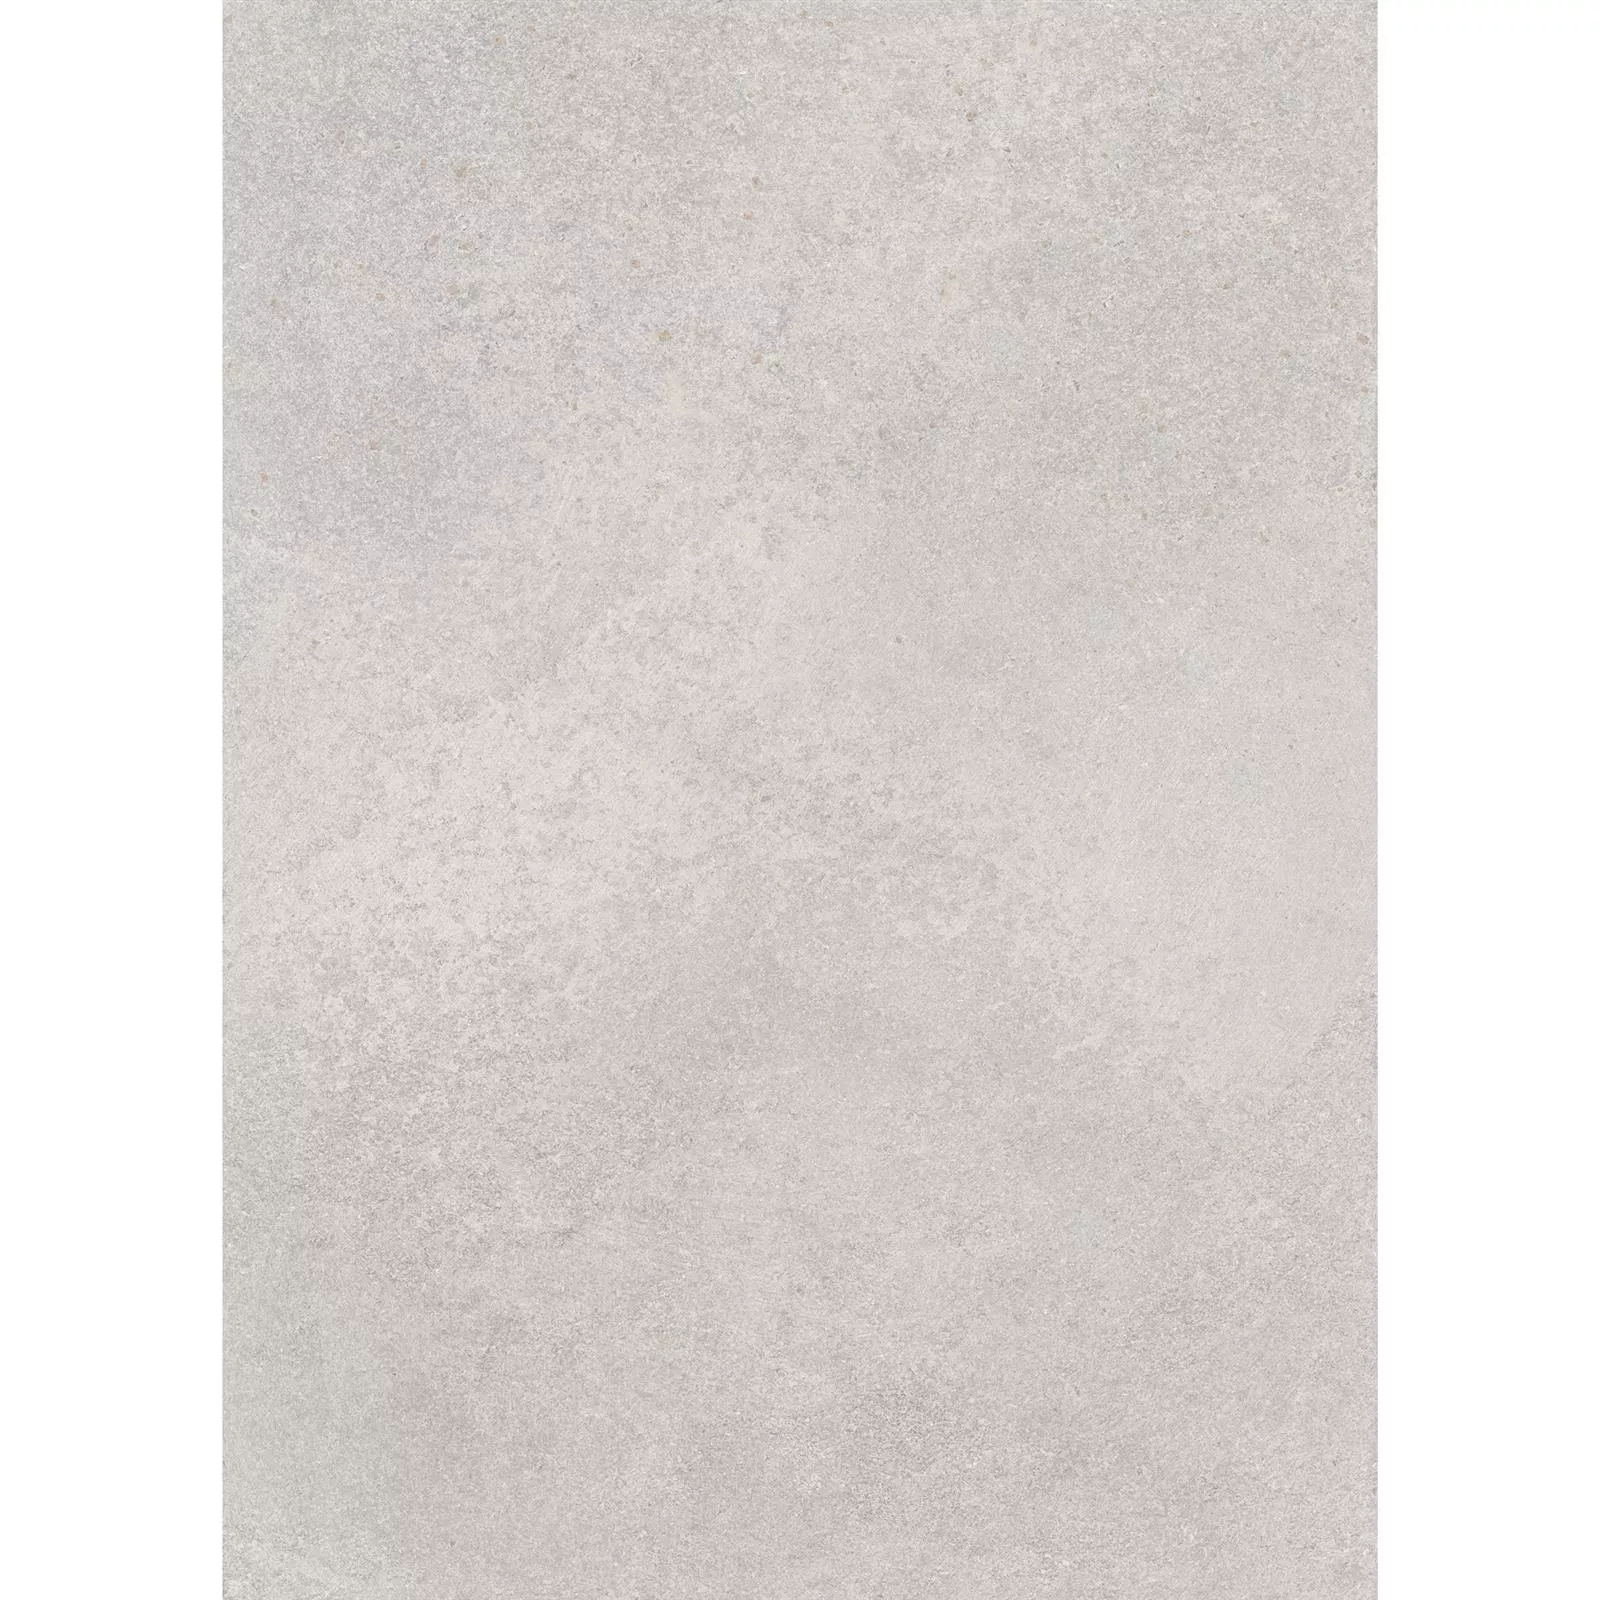 Bodenfliesen Steinoptik Horizon Grau 60x120cm